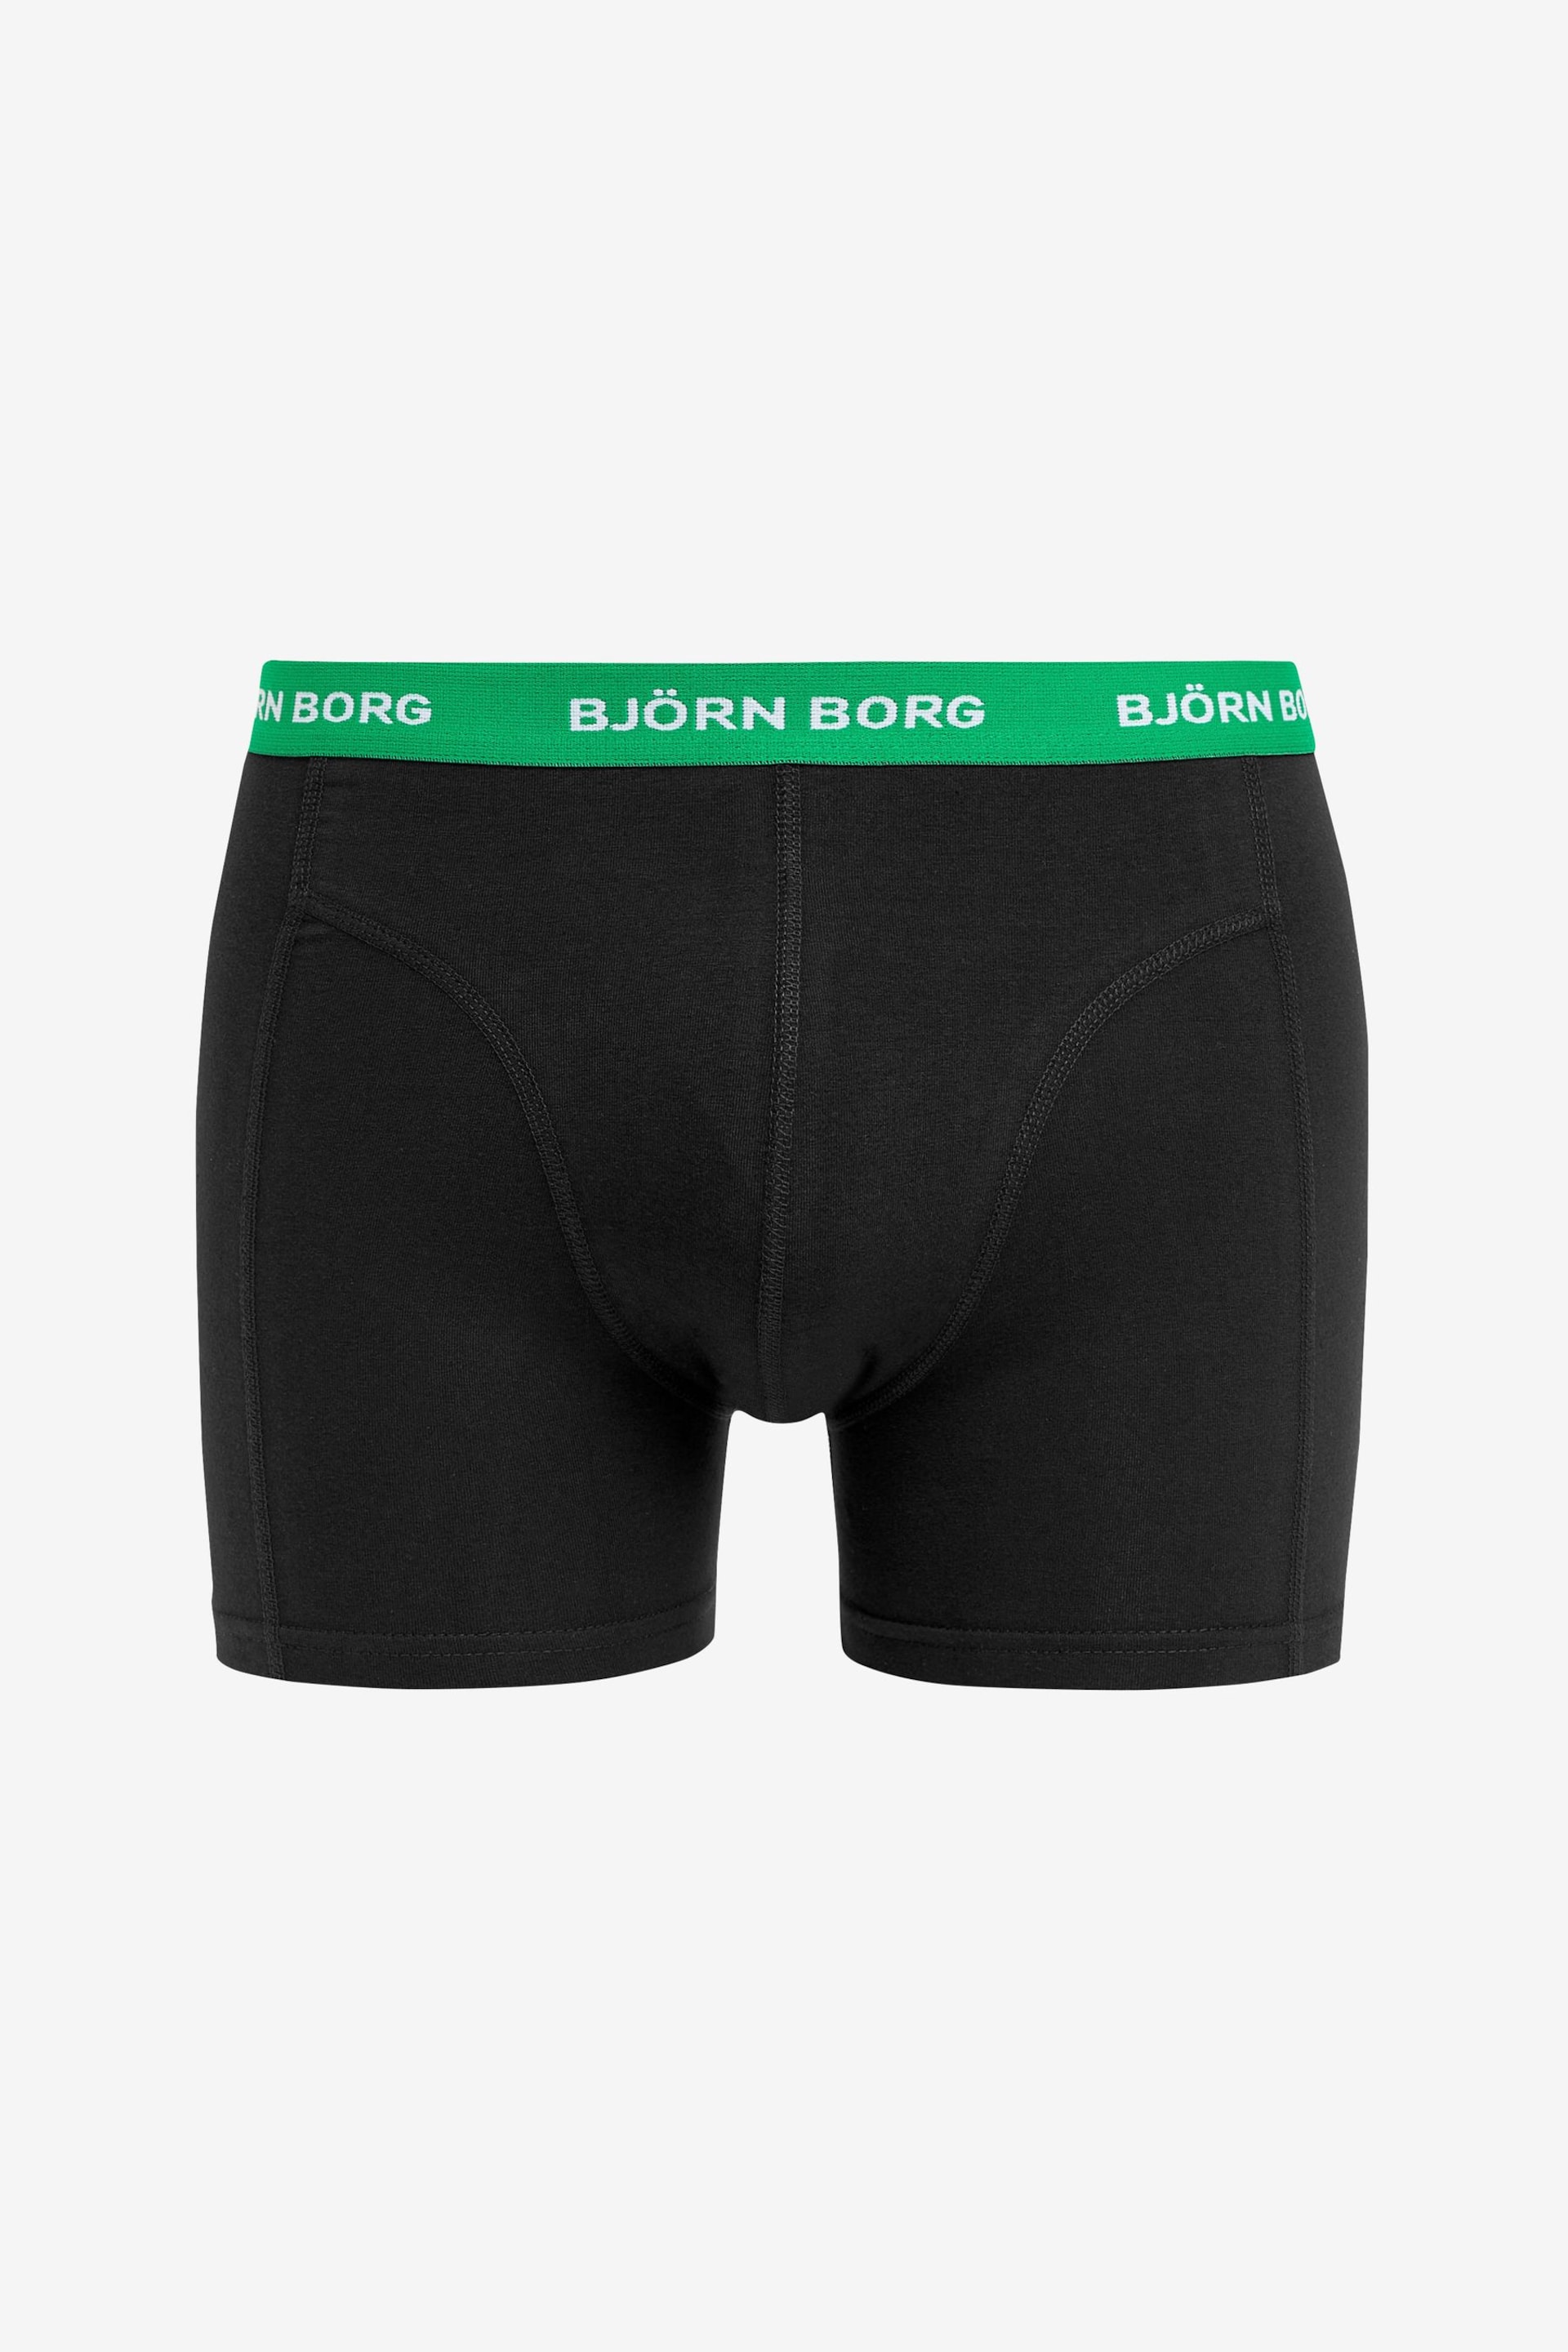 Bjorn Borg Black Cotton Stretch Boxer 5 Pack - Image 6 of 6